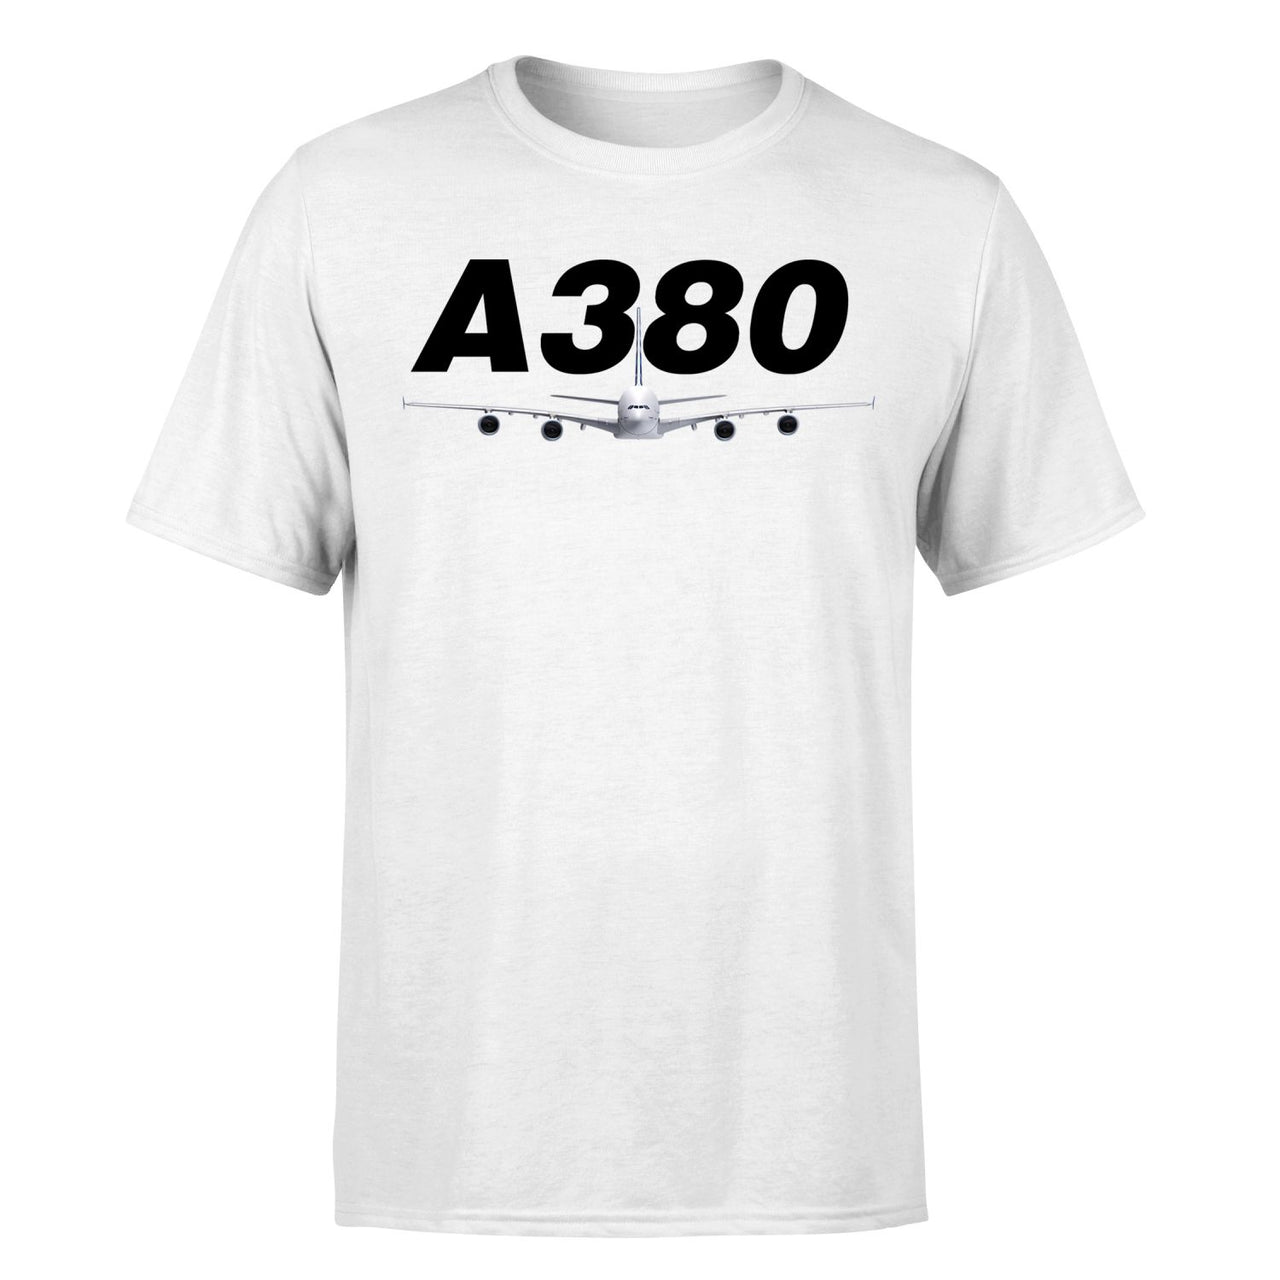 Super Airbus A380 Designed T-Shirts